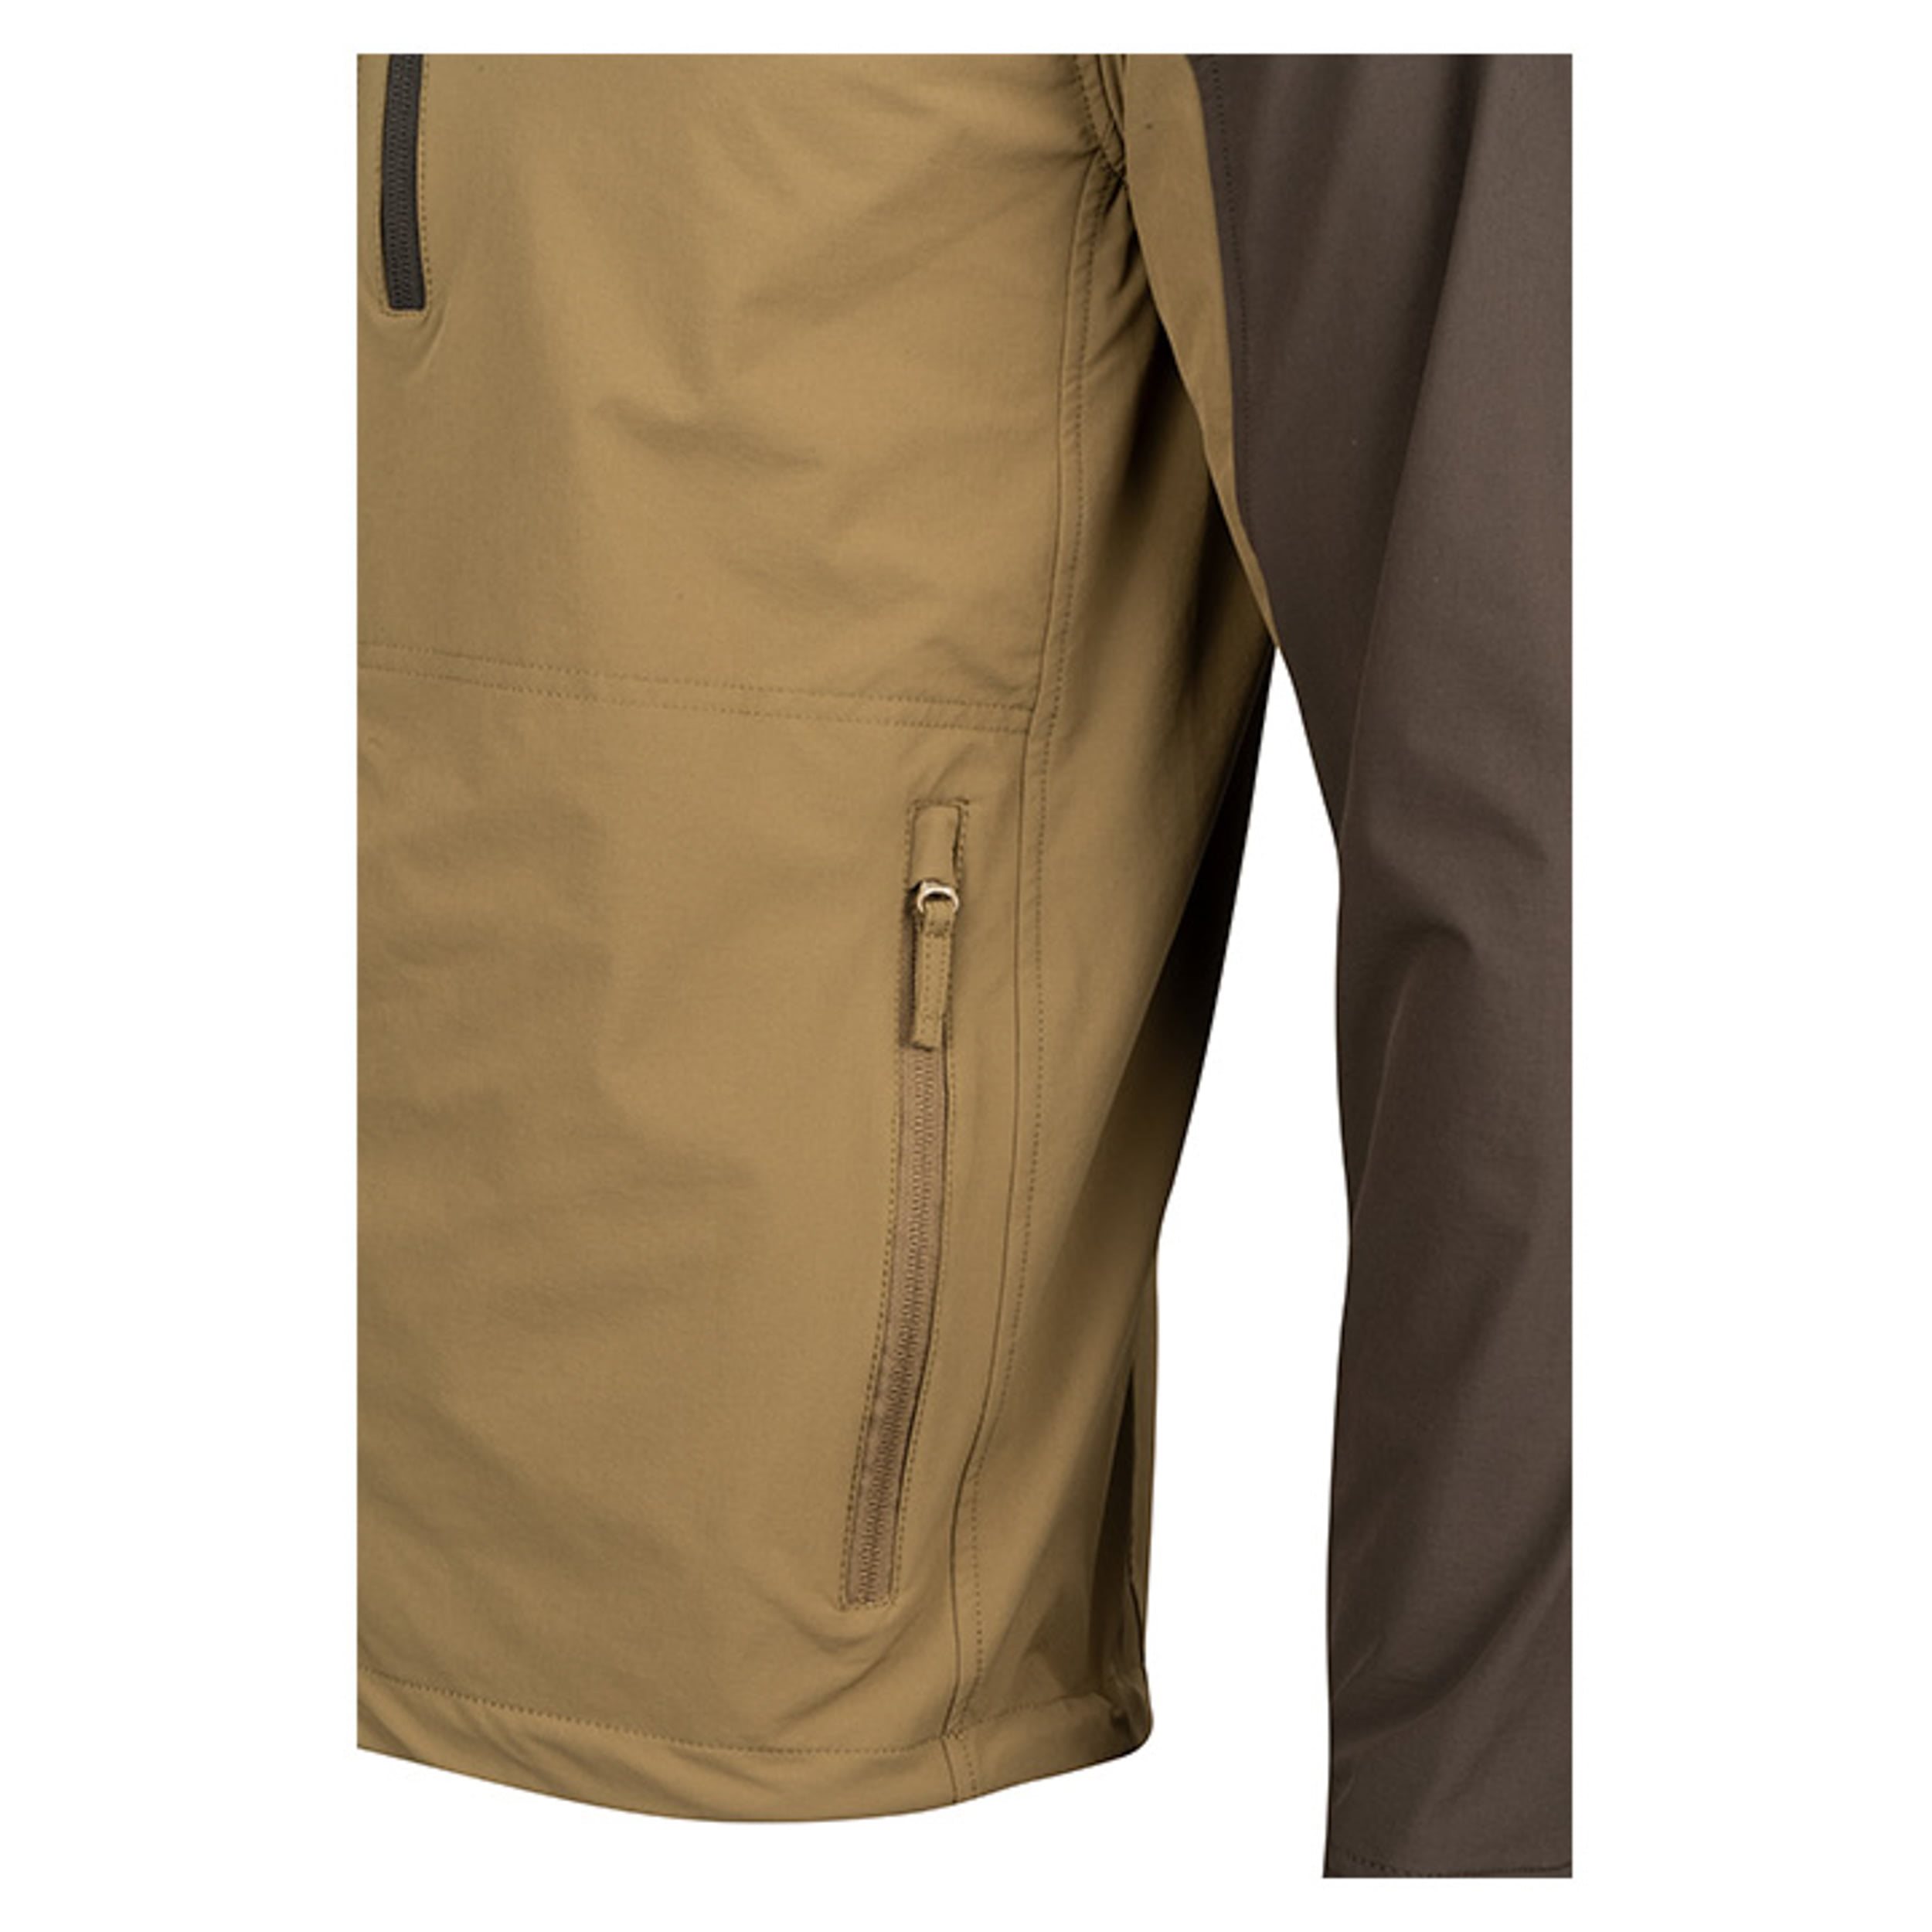 Lightweight Softshell Jacket COYOTE Viper® VJKTLWSSCOY L-11